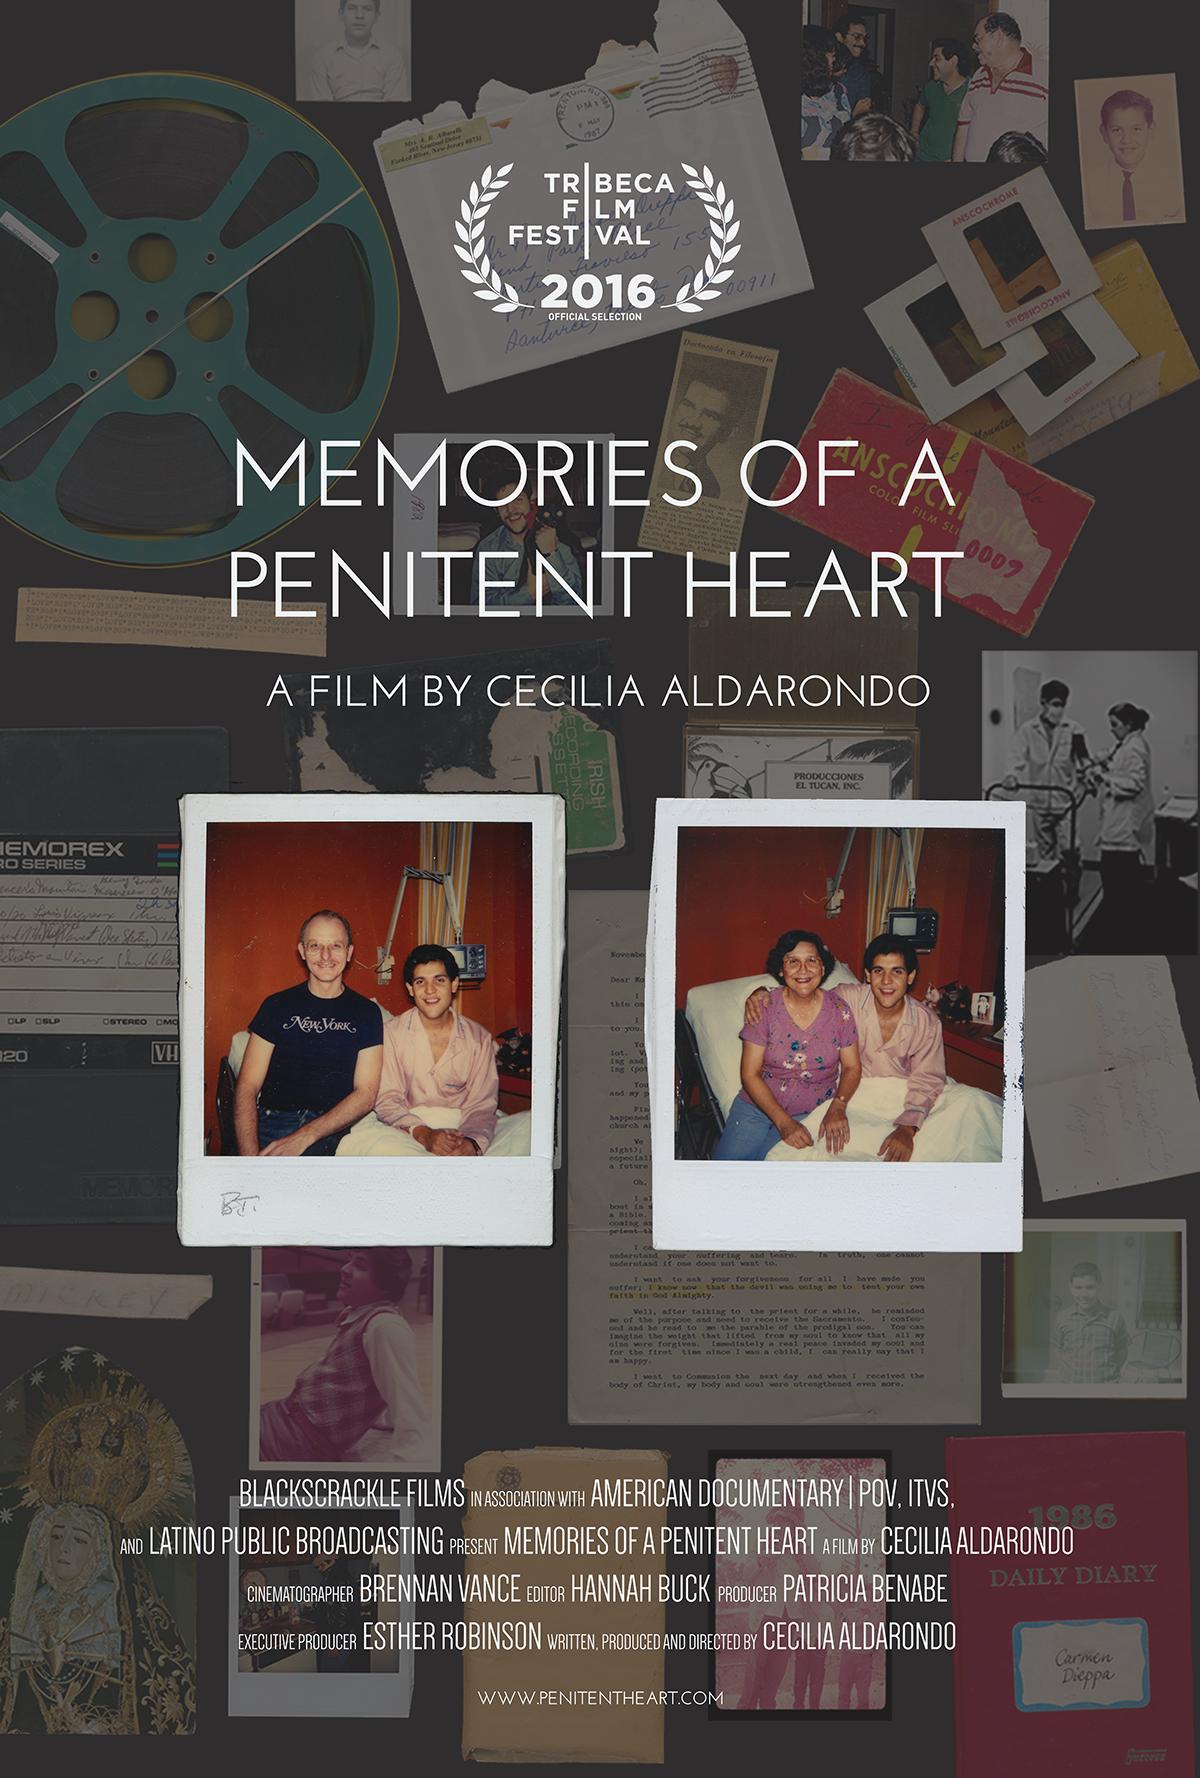 Nonton film Memories of a Penitent Heart layarkaca21 indoxx1 ganool online streaming terbaru